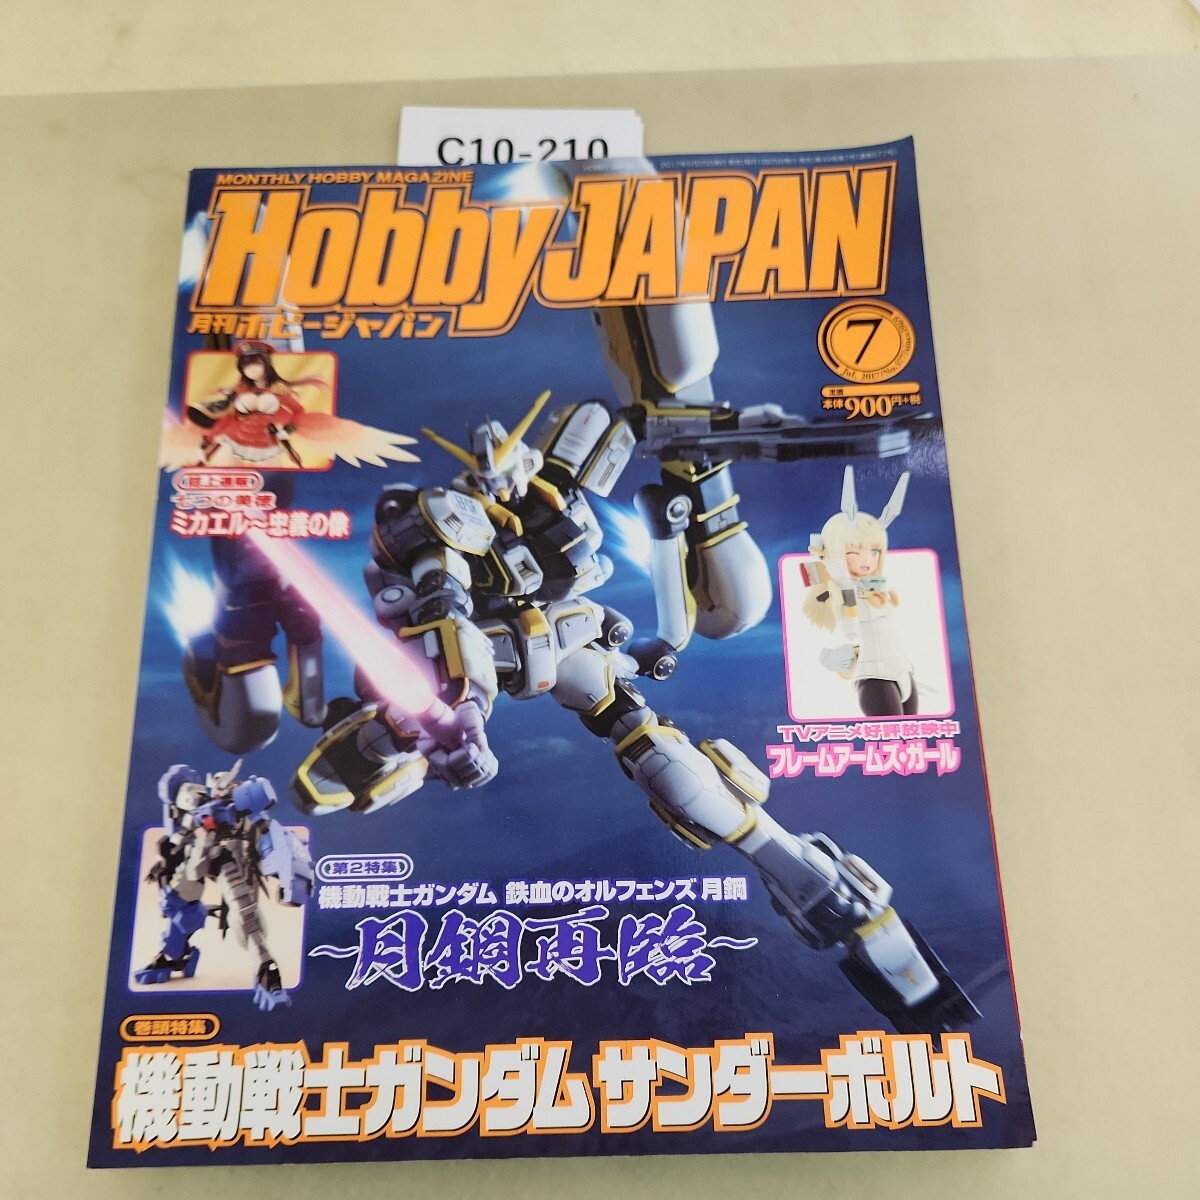 C10-210 Hobby Japan 2017 7 Мобильный костюм Gundam Thunderbolt Железные сироты Луна Сталь